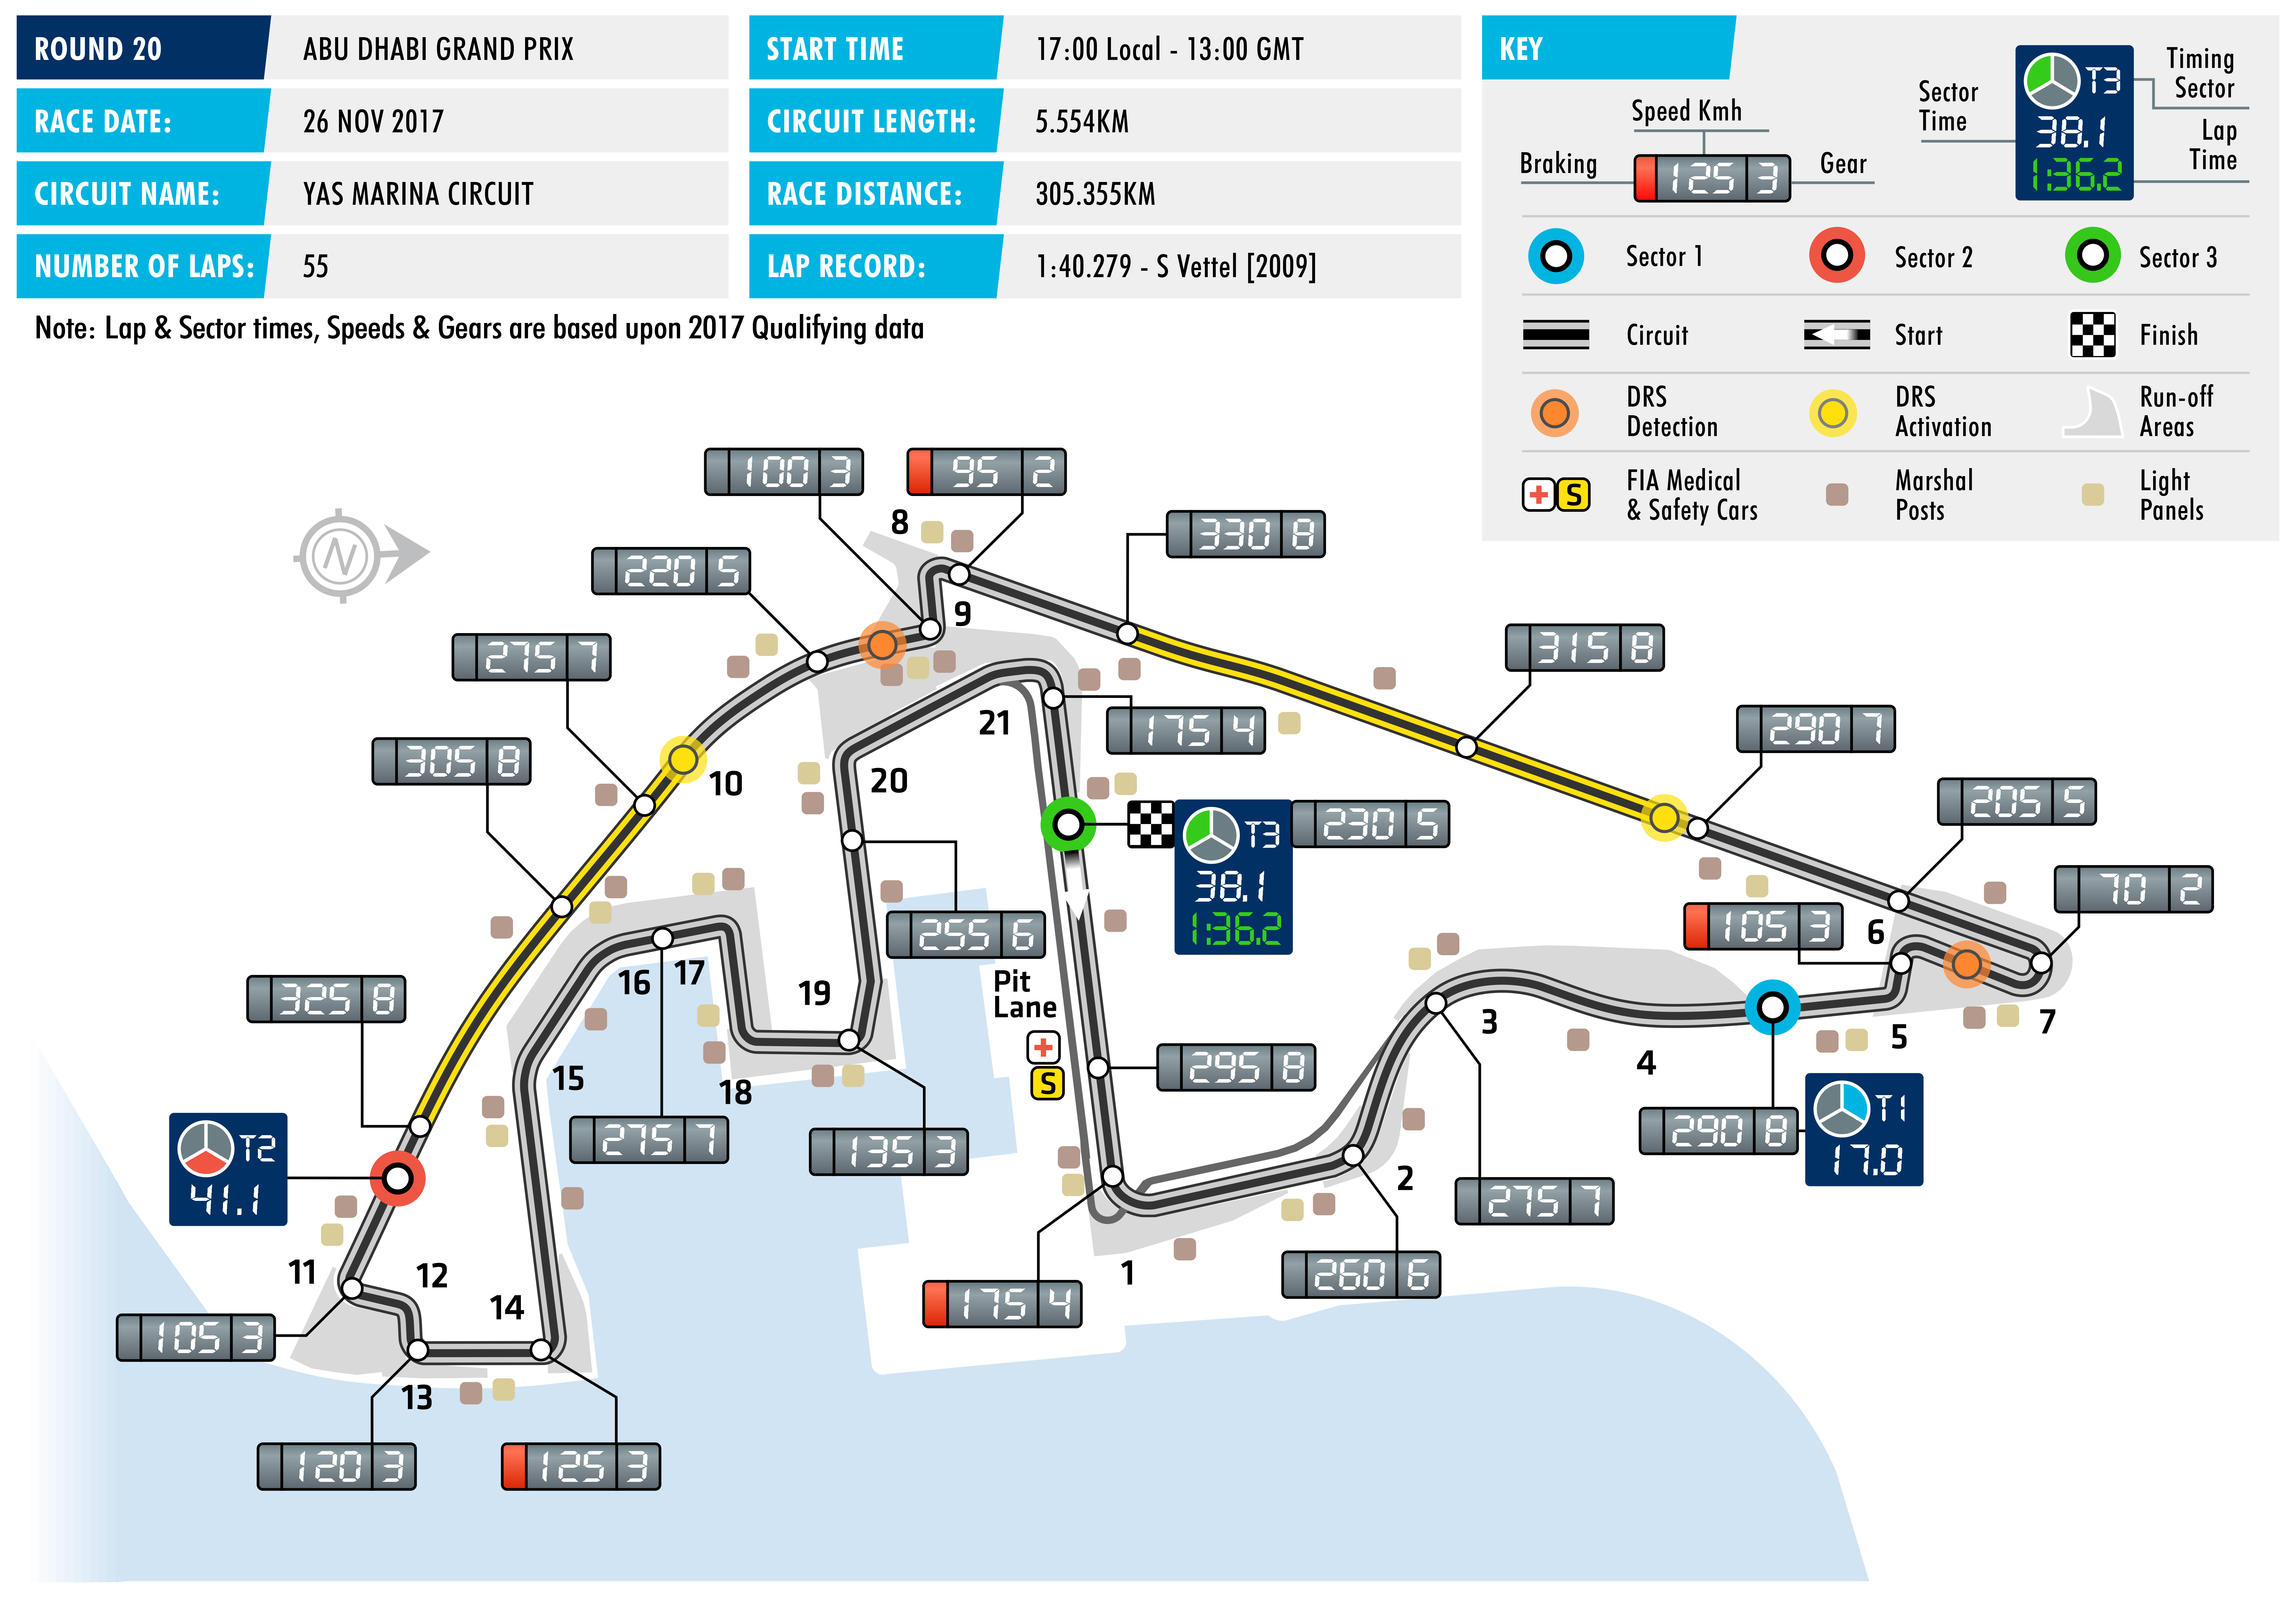 2017 Abu Dhabi Grand Prix - Circuit Map